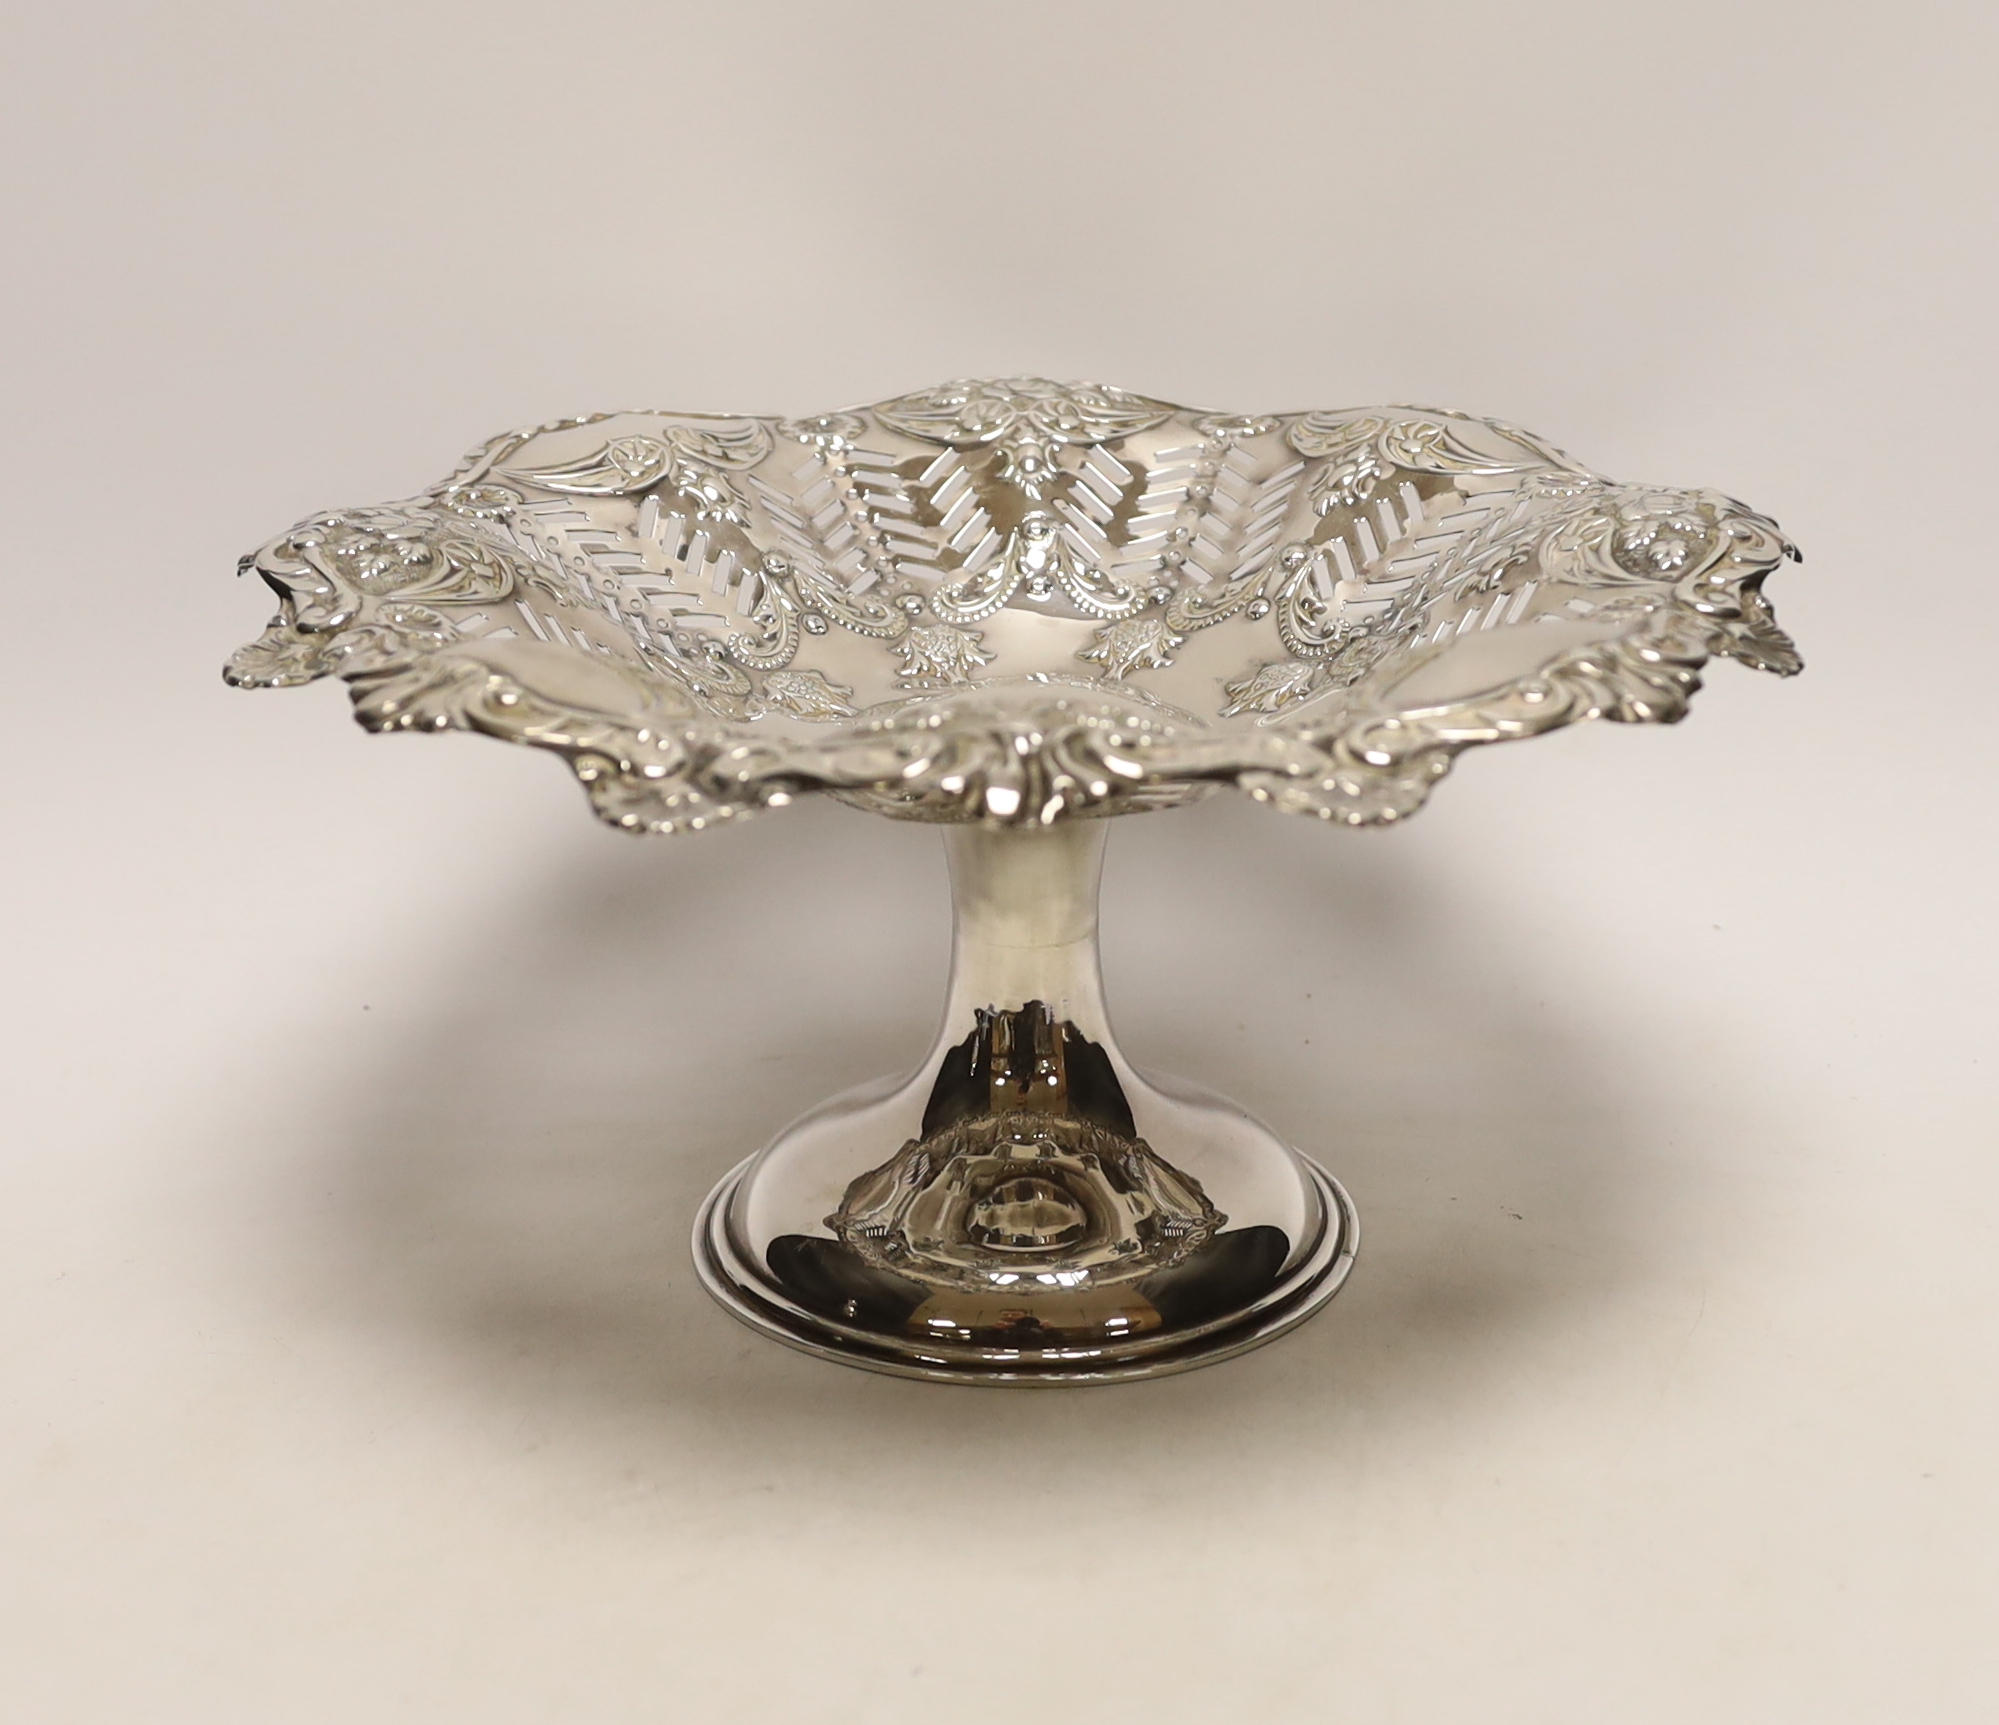 An Edwardian pieced silver pierced pedestal bowl, with wavy border, by S. Glass, Birmingham, 1902, diameter 28.5cm, 15.8oz.